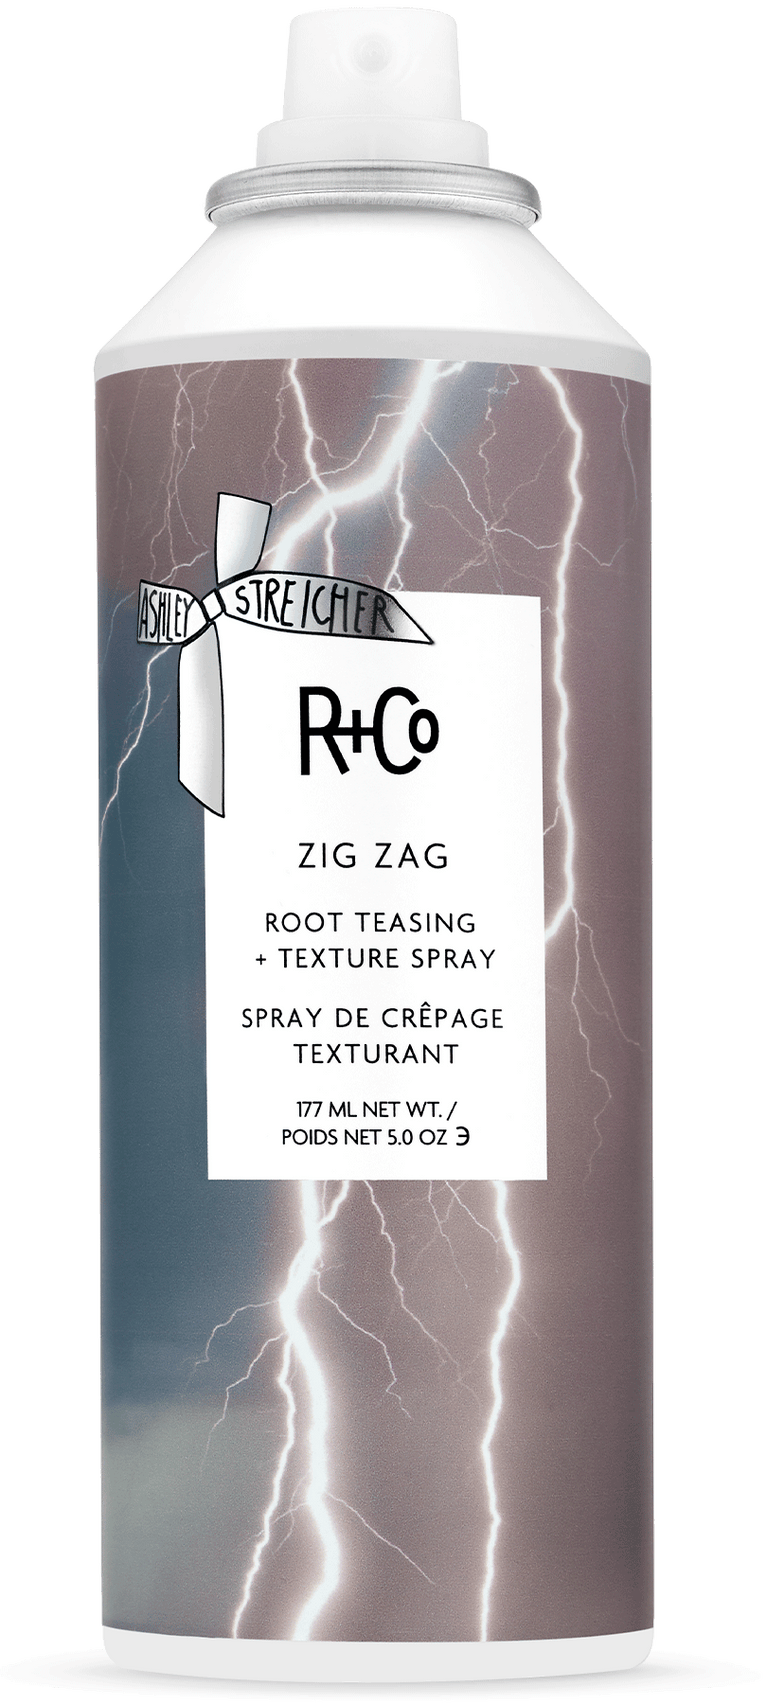 ZIG ZAG Root Teasing + Texture Spray – R+Co